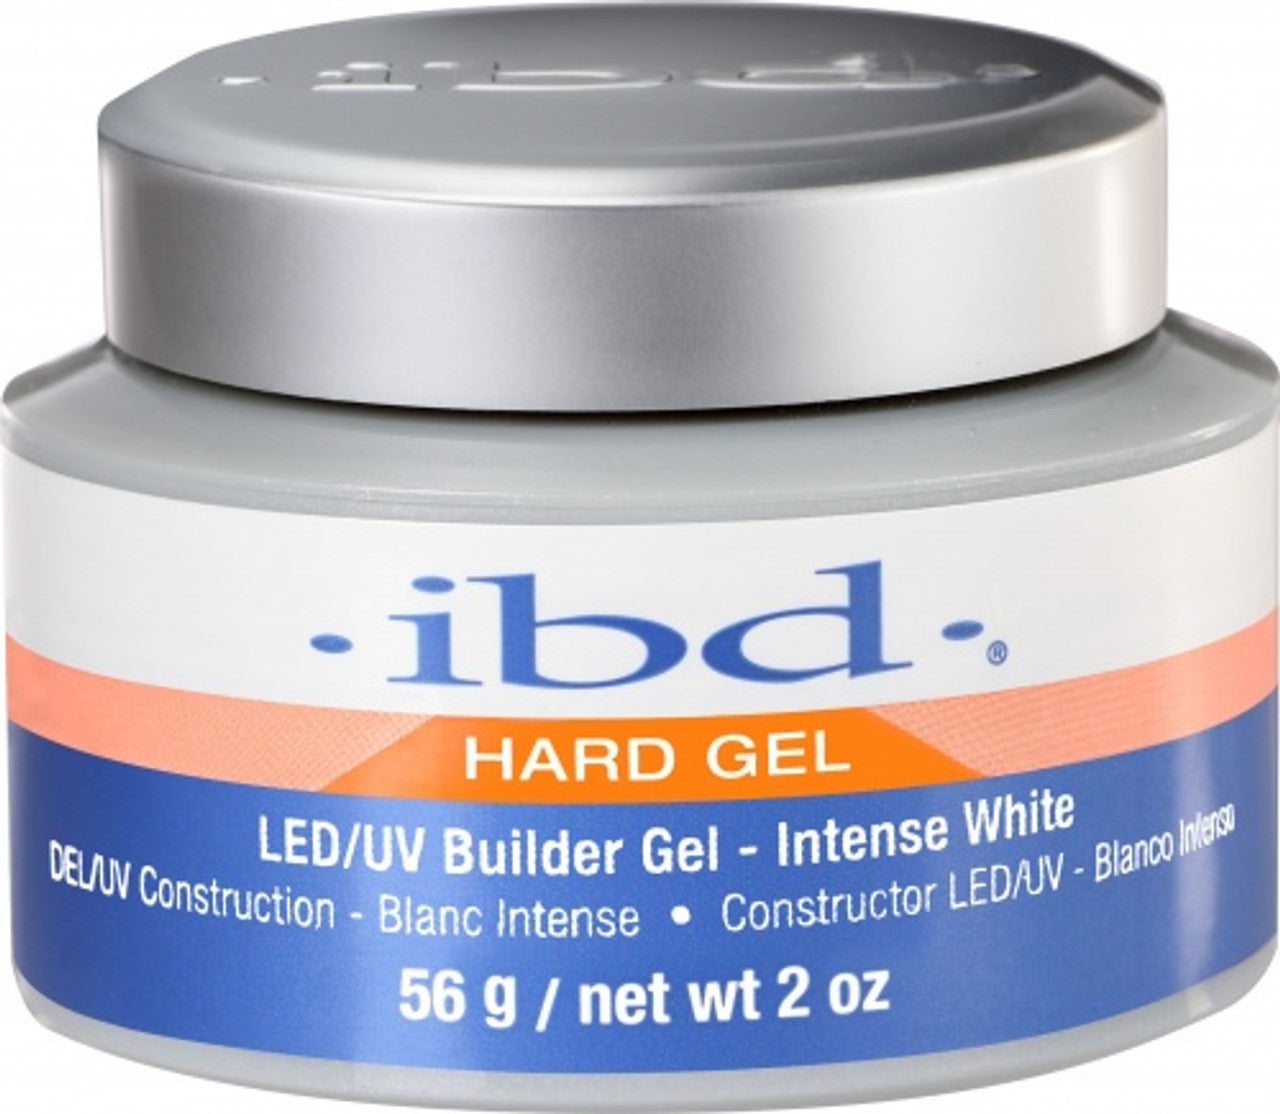 IBD LED/UV Gels Builder Gel